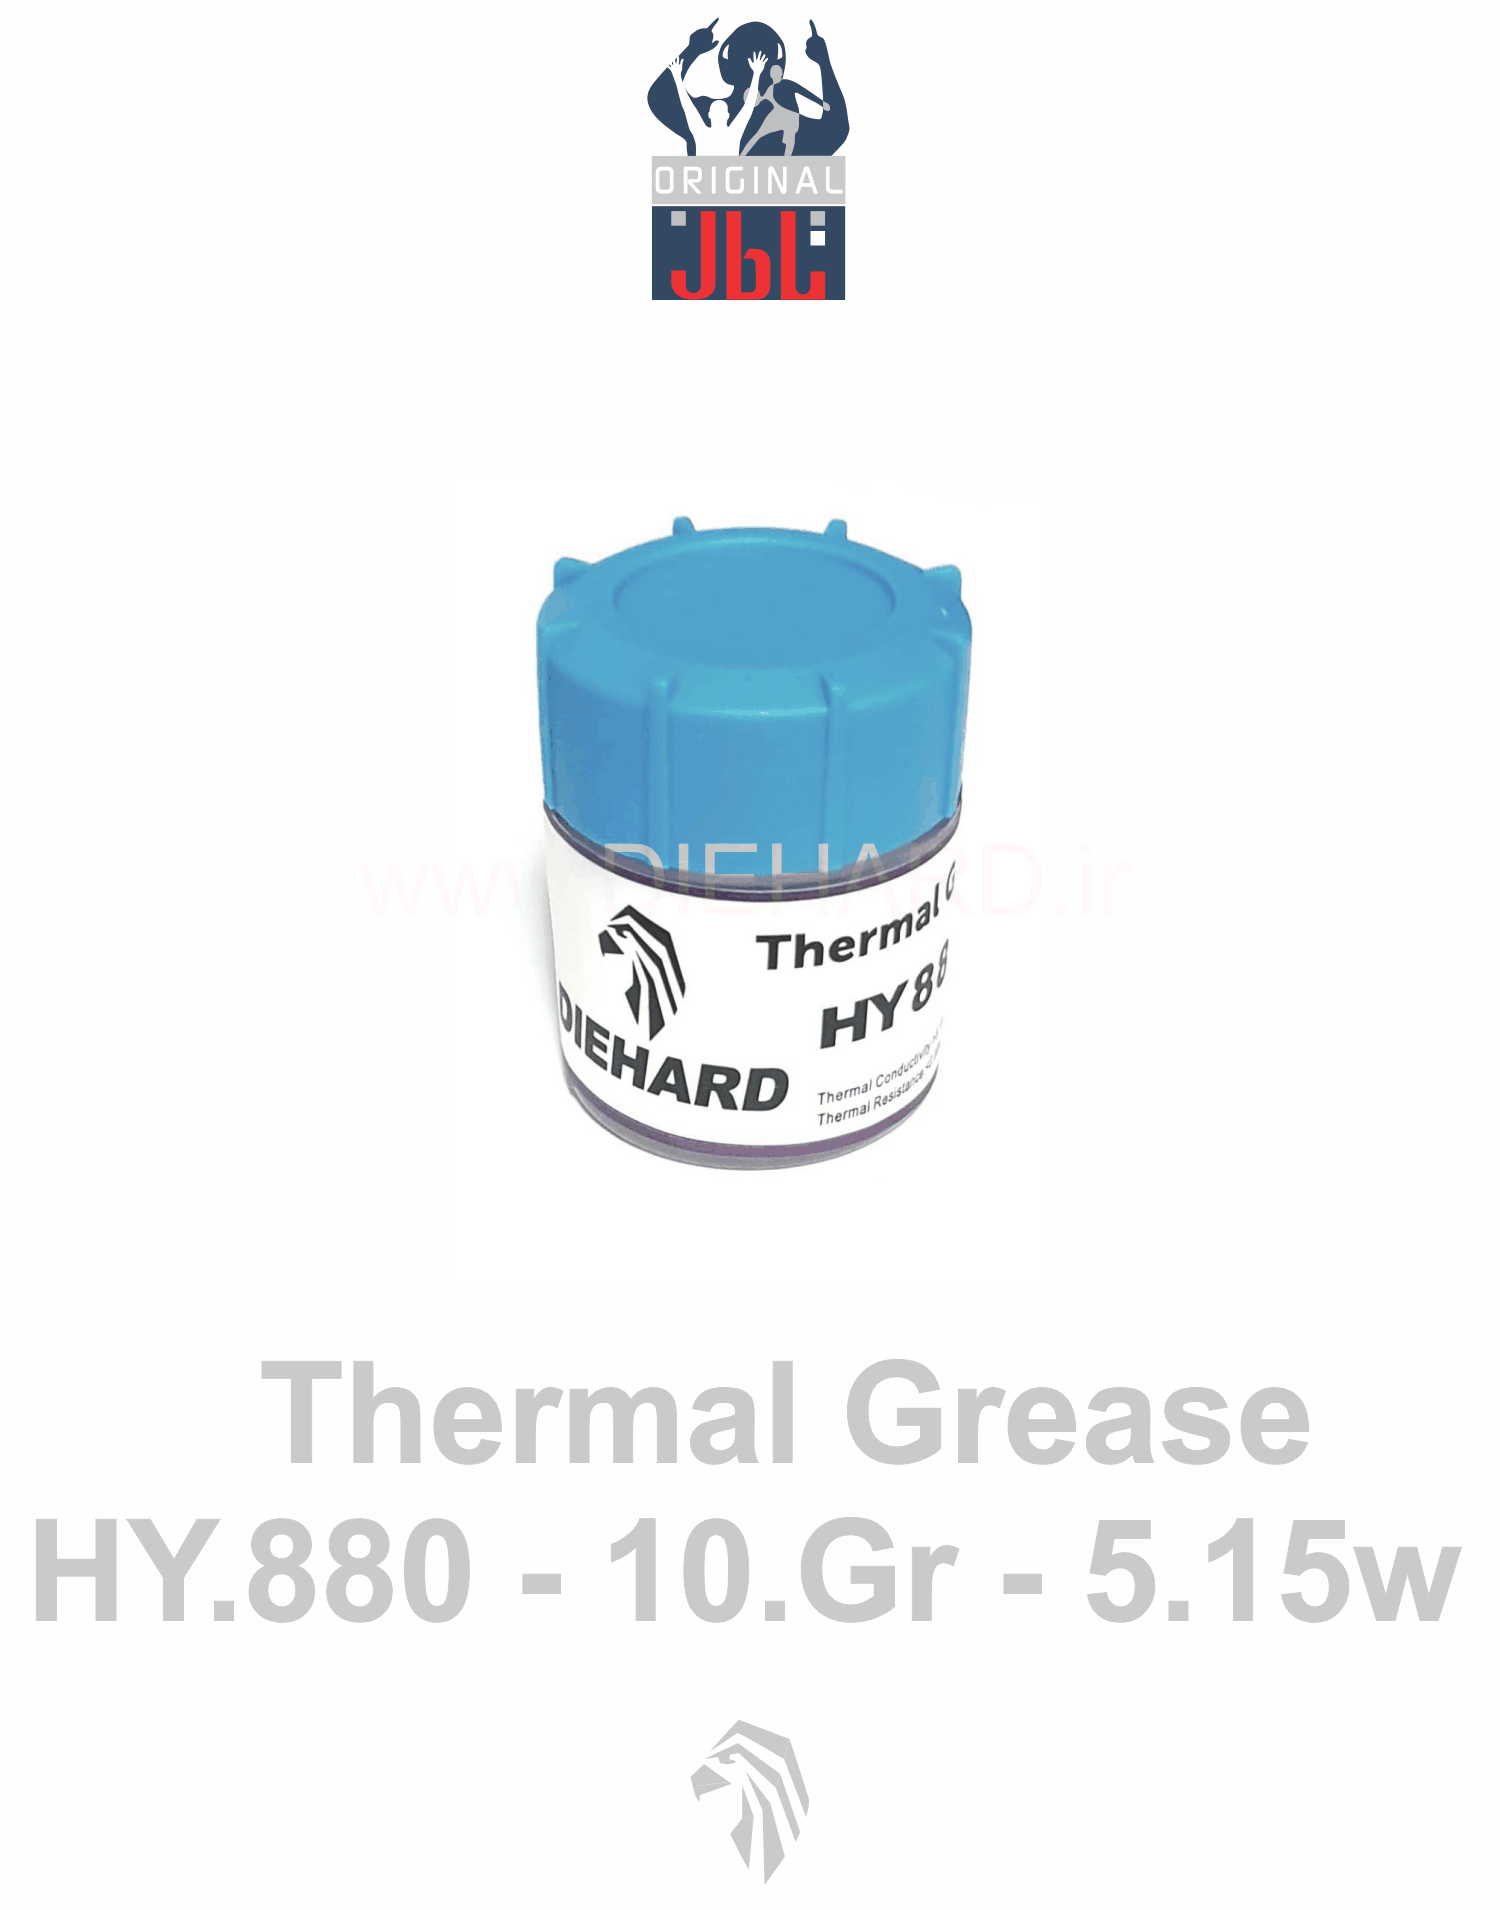 ابزار - سلیکون فن - Ps4 & XBOX Thermal Grease - HY.880 - 10Gr - 5.15W